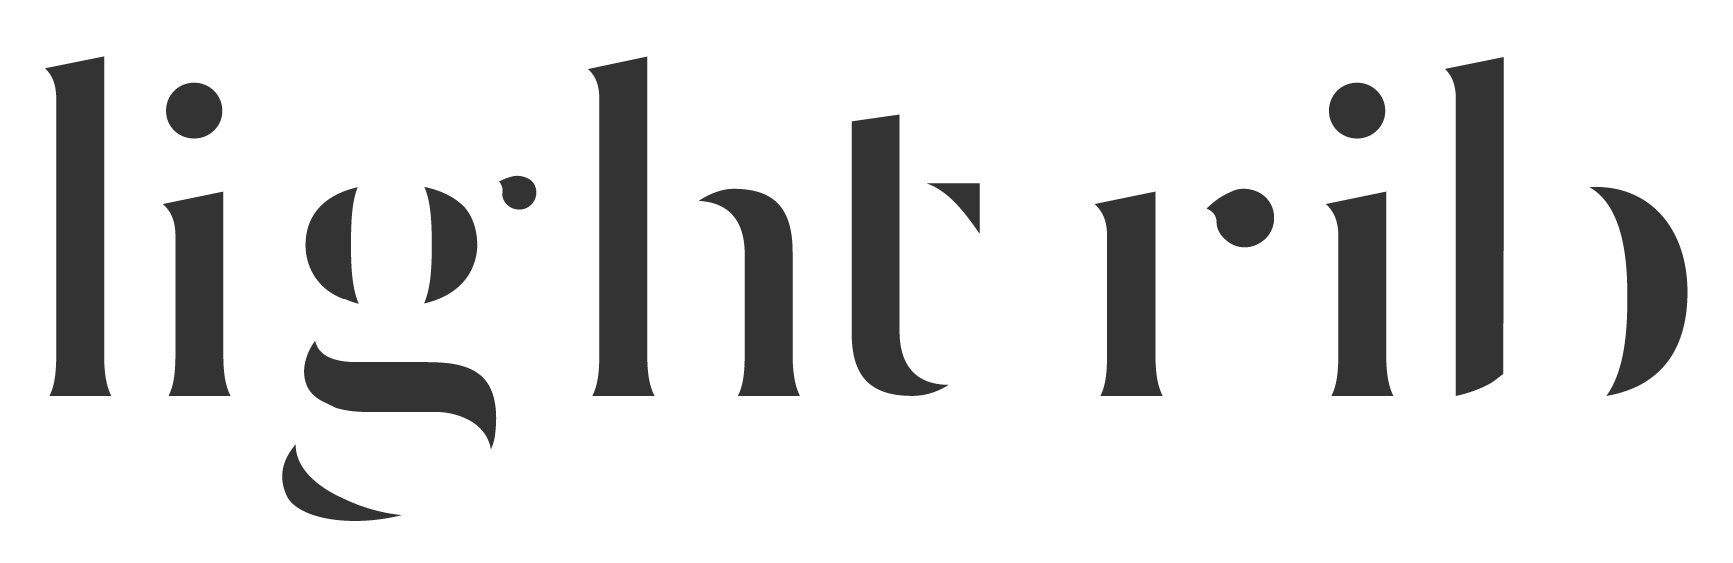 light rib logo